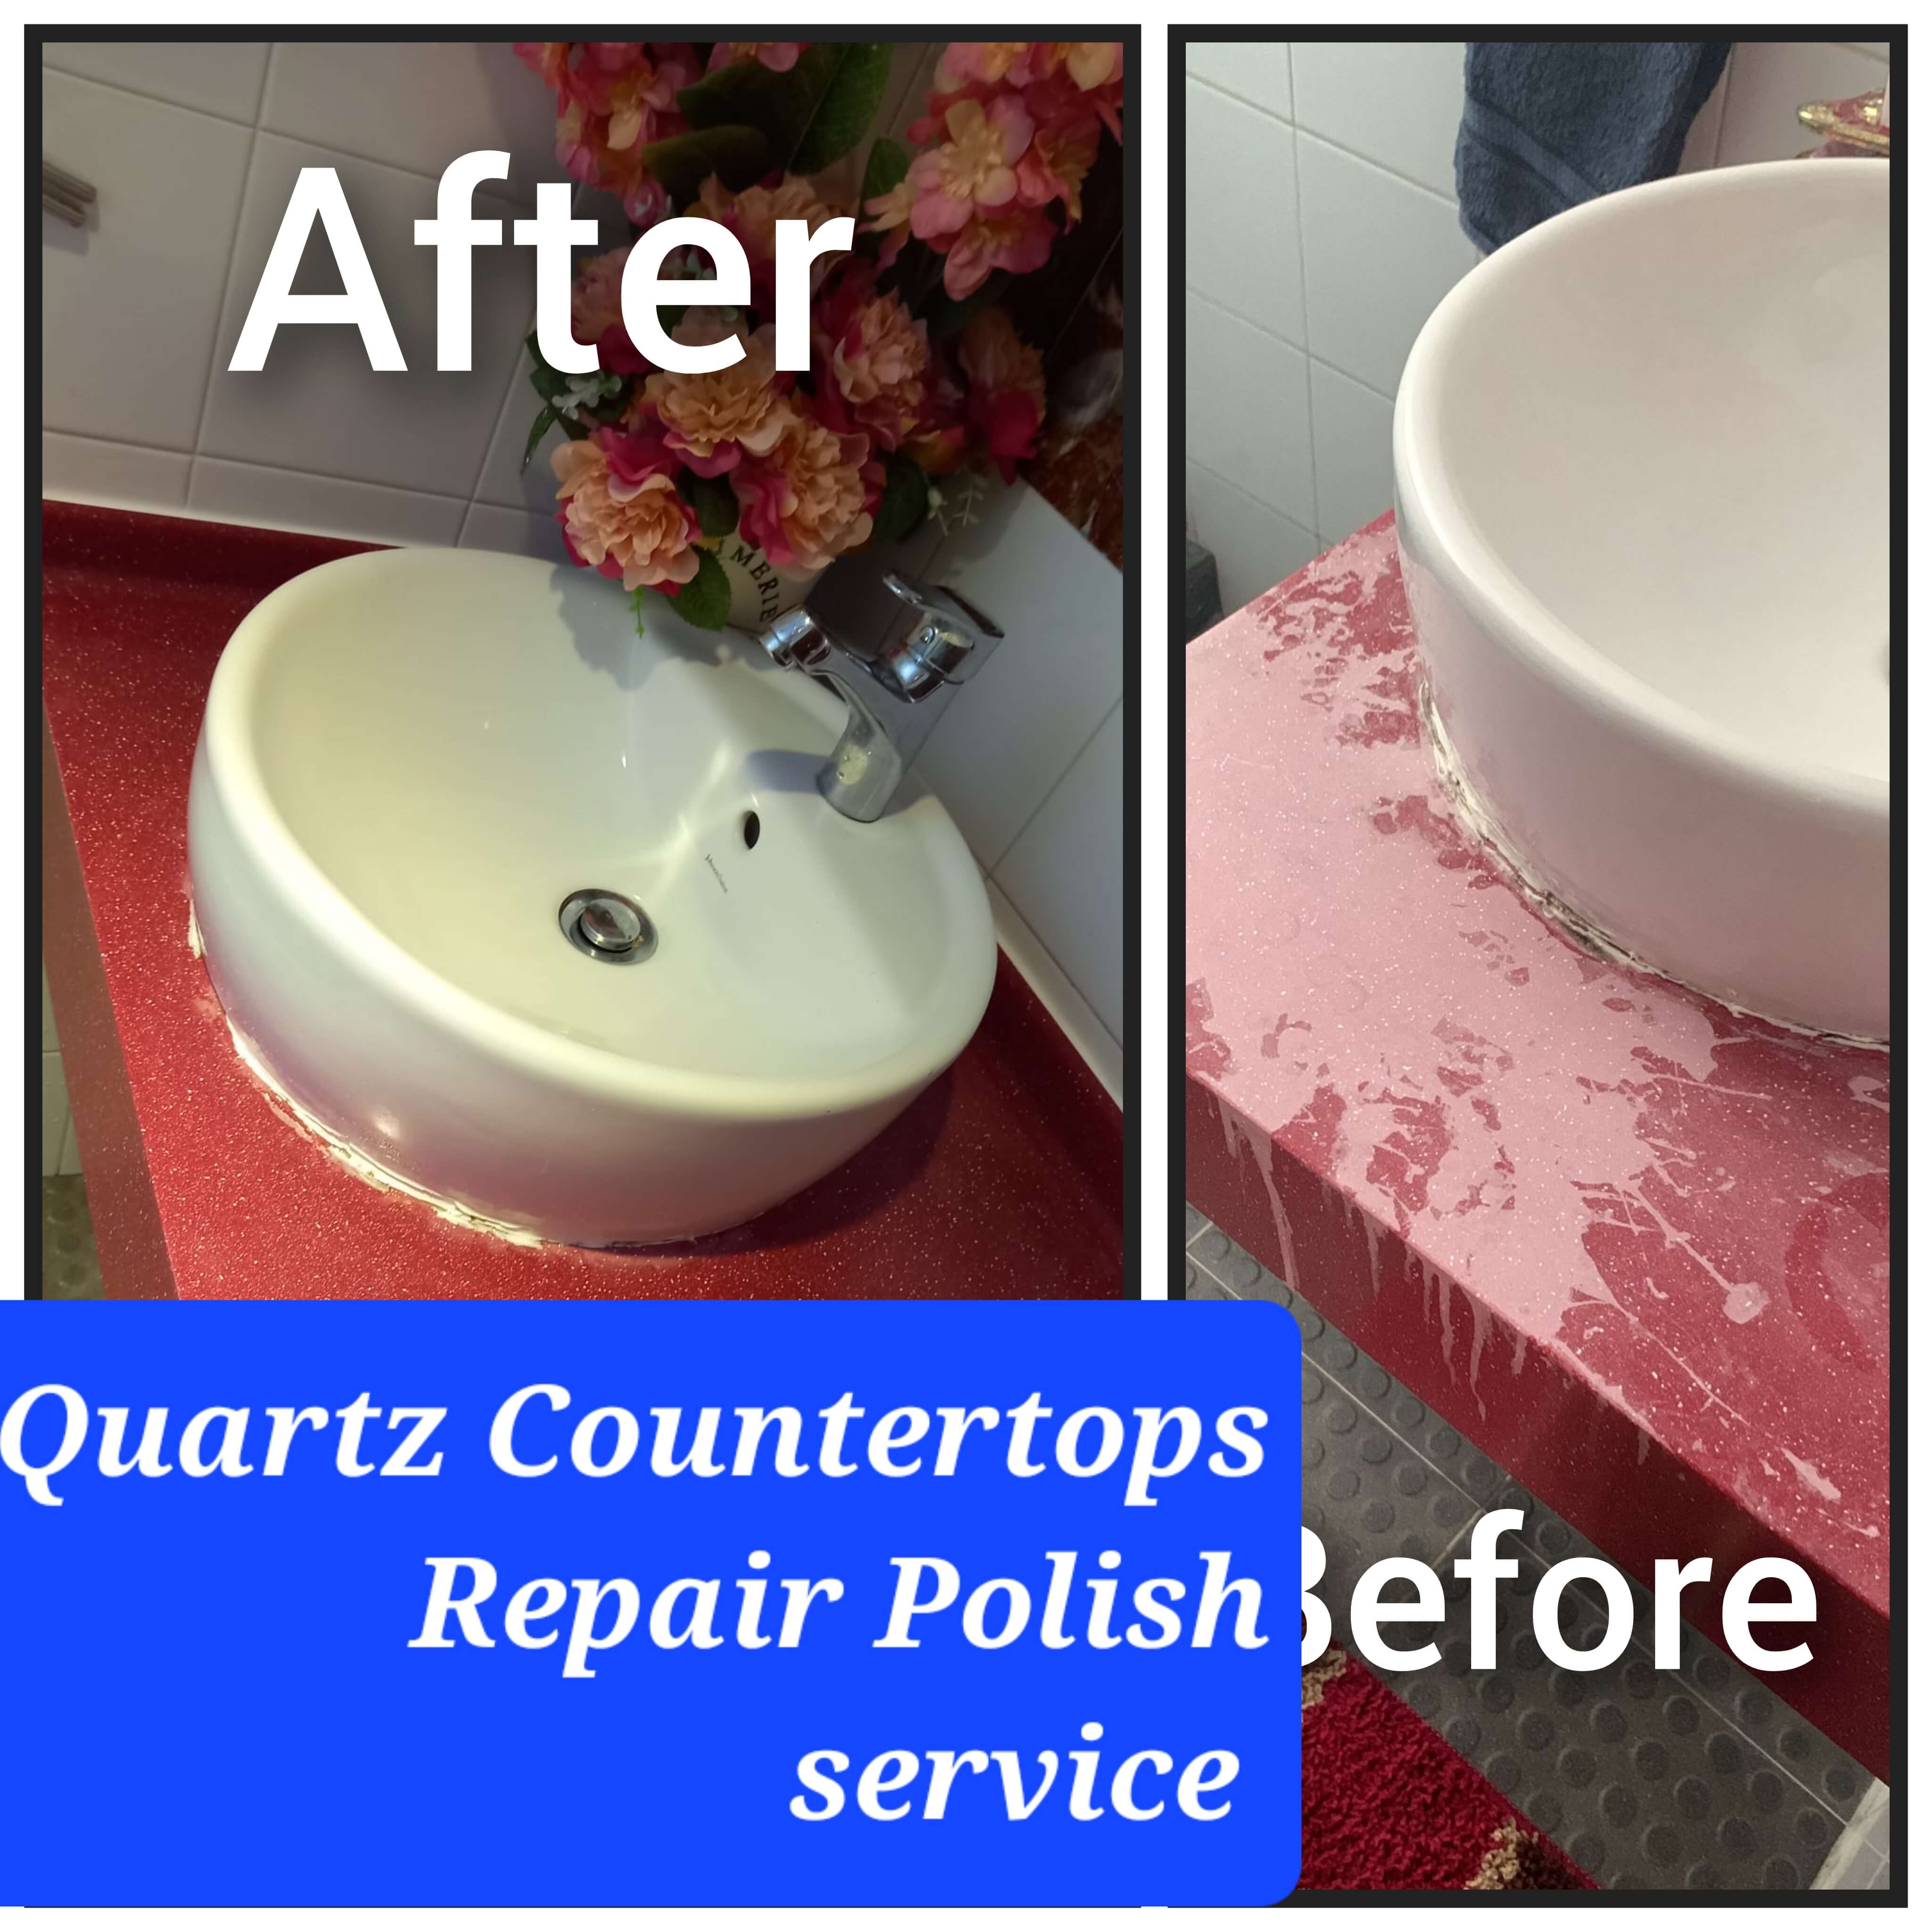 Before and after Quartz Countertops repair polish 